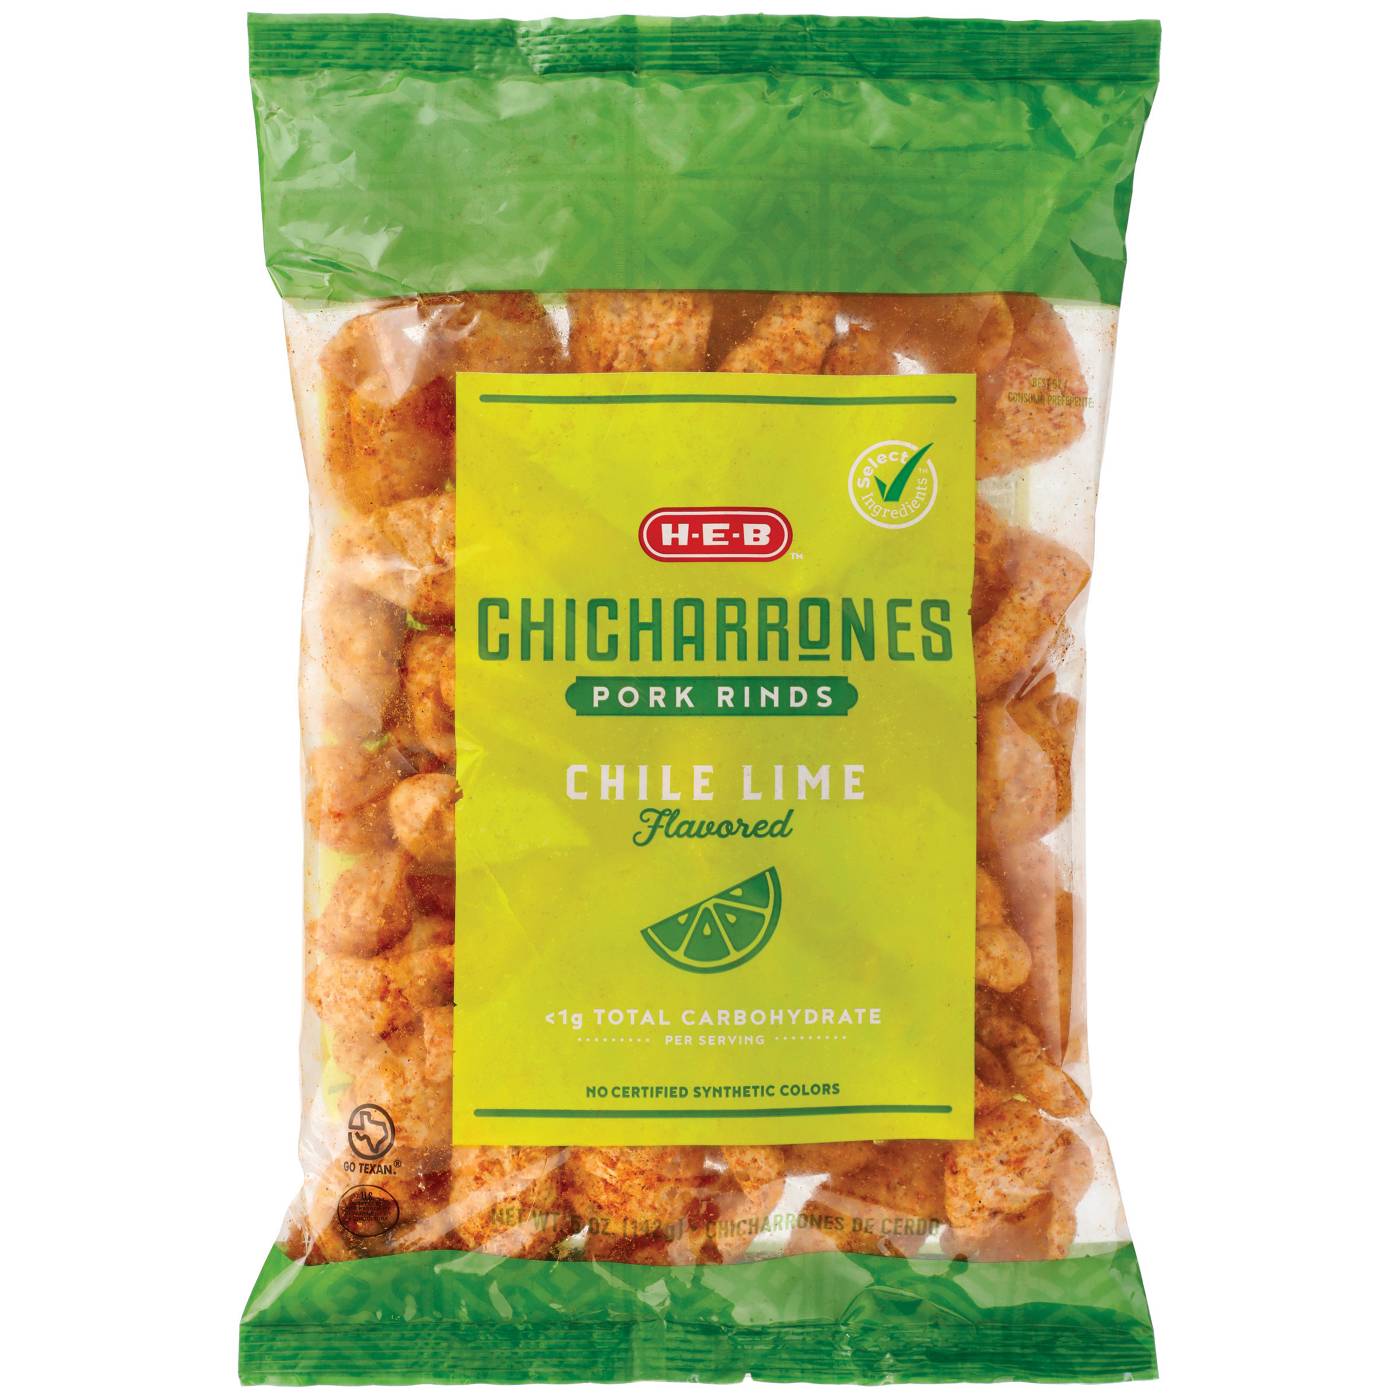 H-E-B Chicharrones Pork Rinds - Chile Lime; image 1 of 2